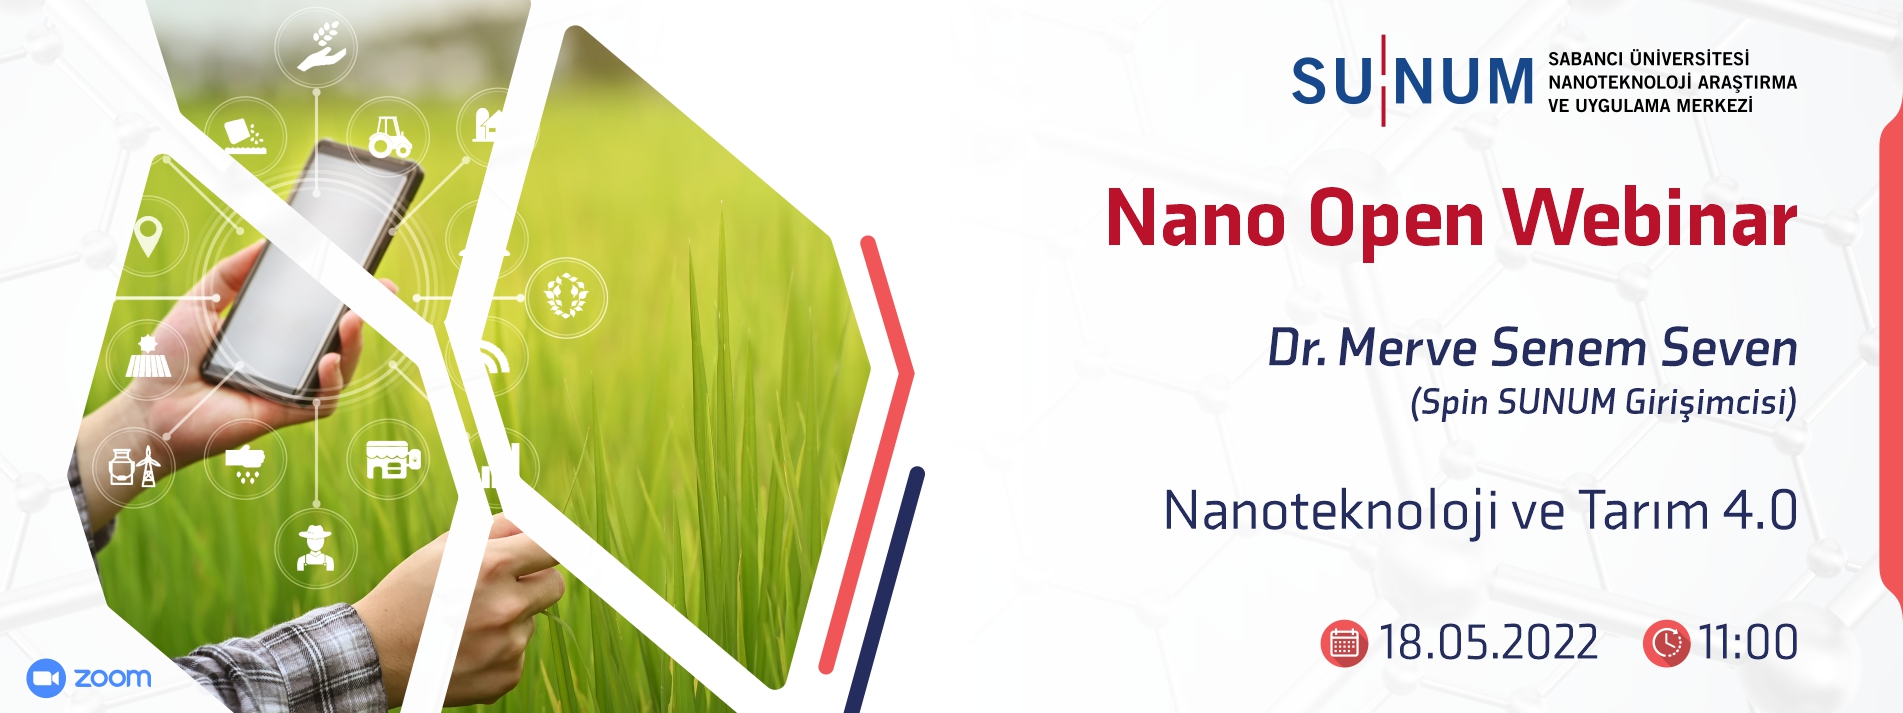 Nanoteknoloji ve Tarım 4.0